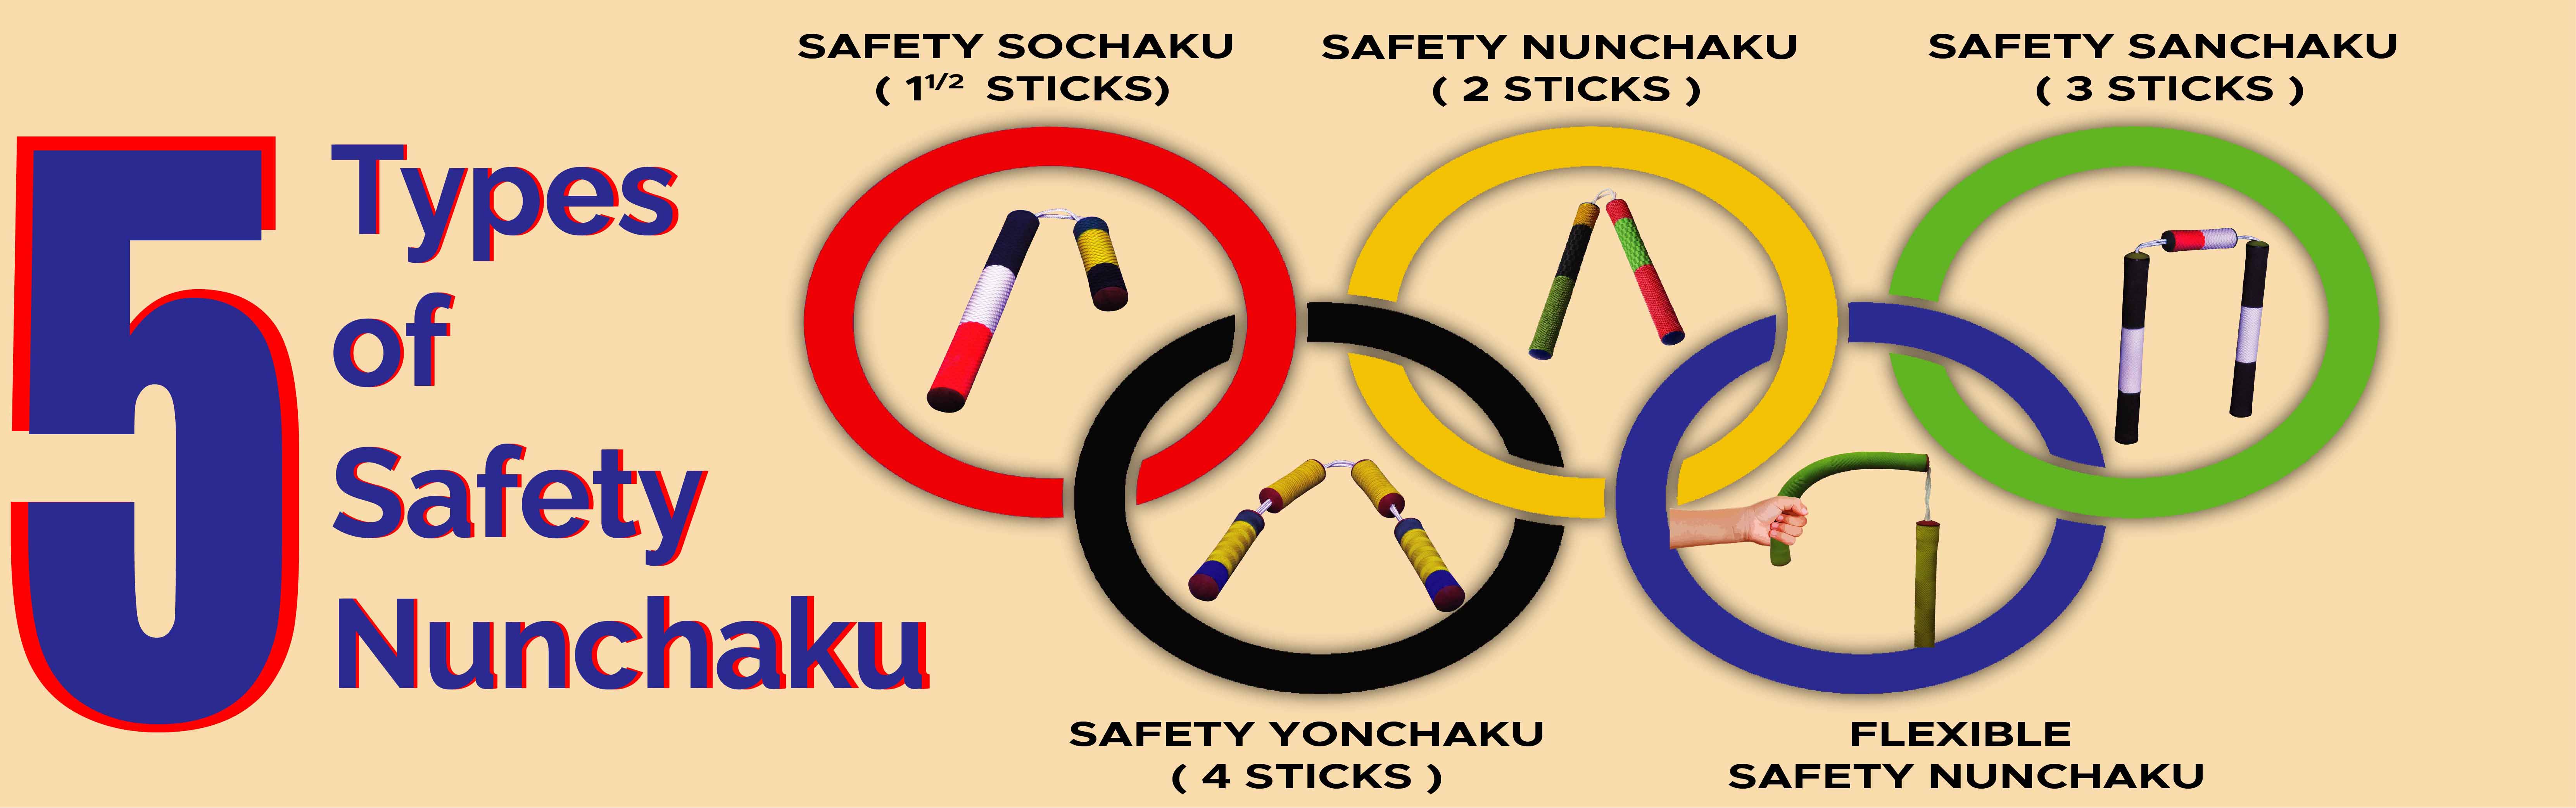 Safety Nunchaku